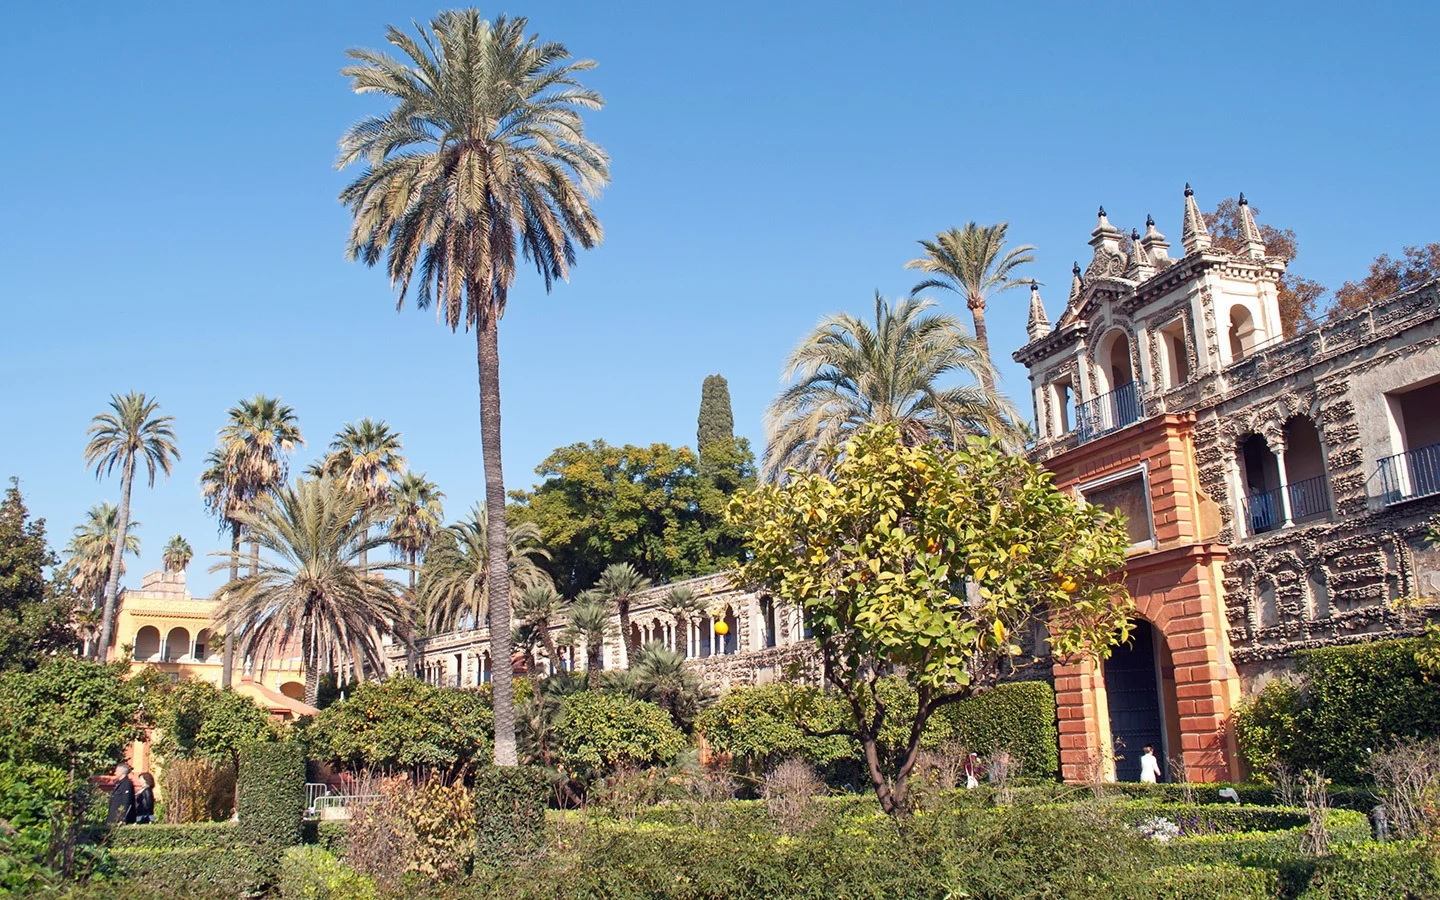 The gardens at the Real Alcazar, Seville